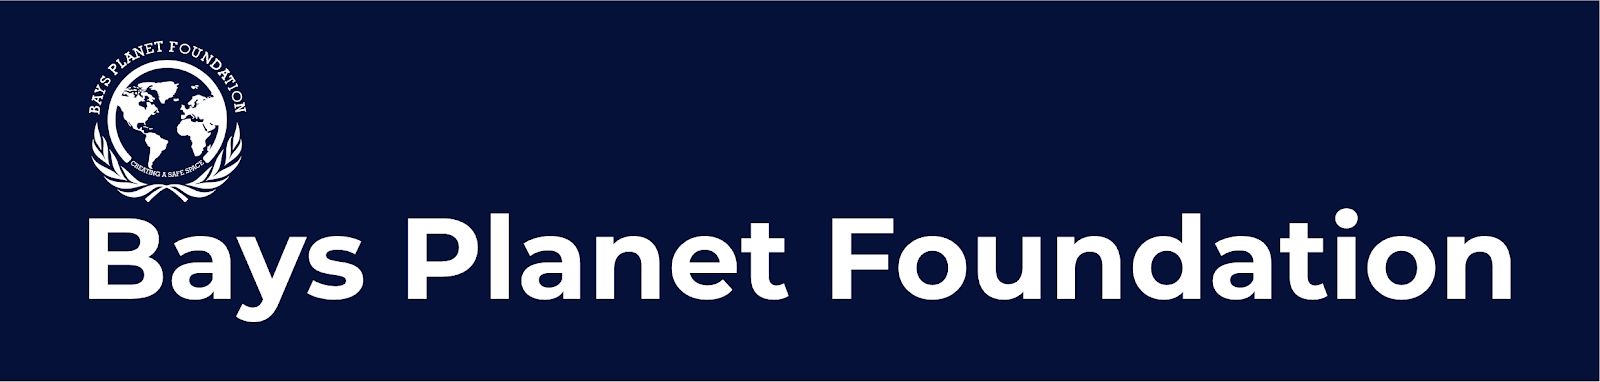 Bays Planet Foundation